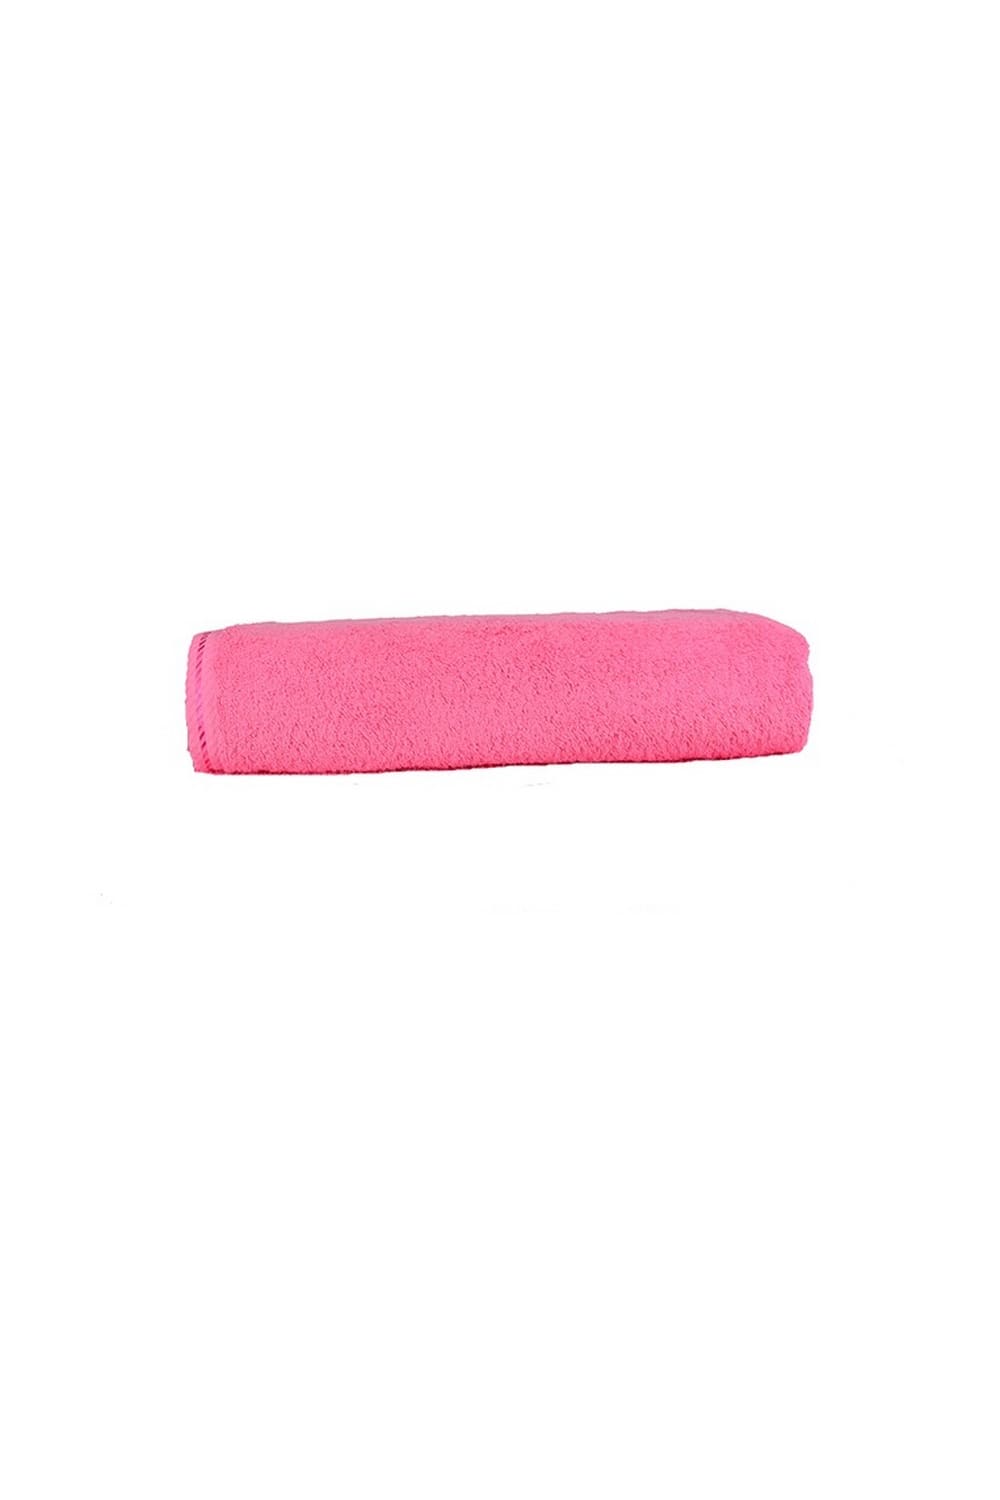 A&R Towels Ultra Soft Bath towel (Pink) (One Size)